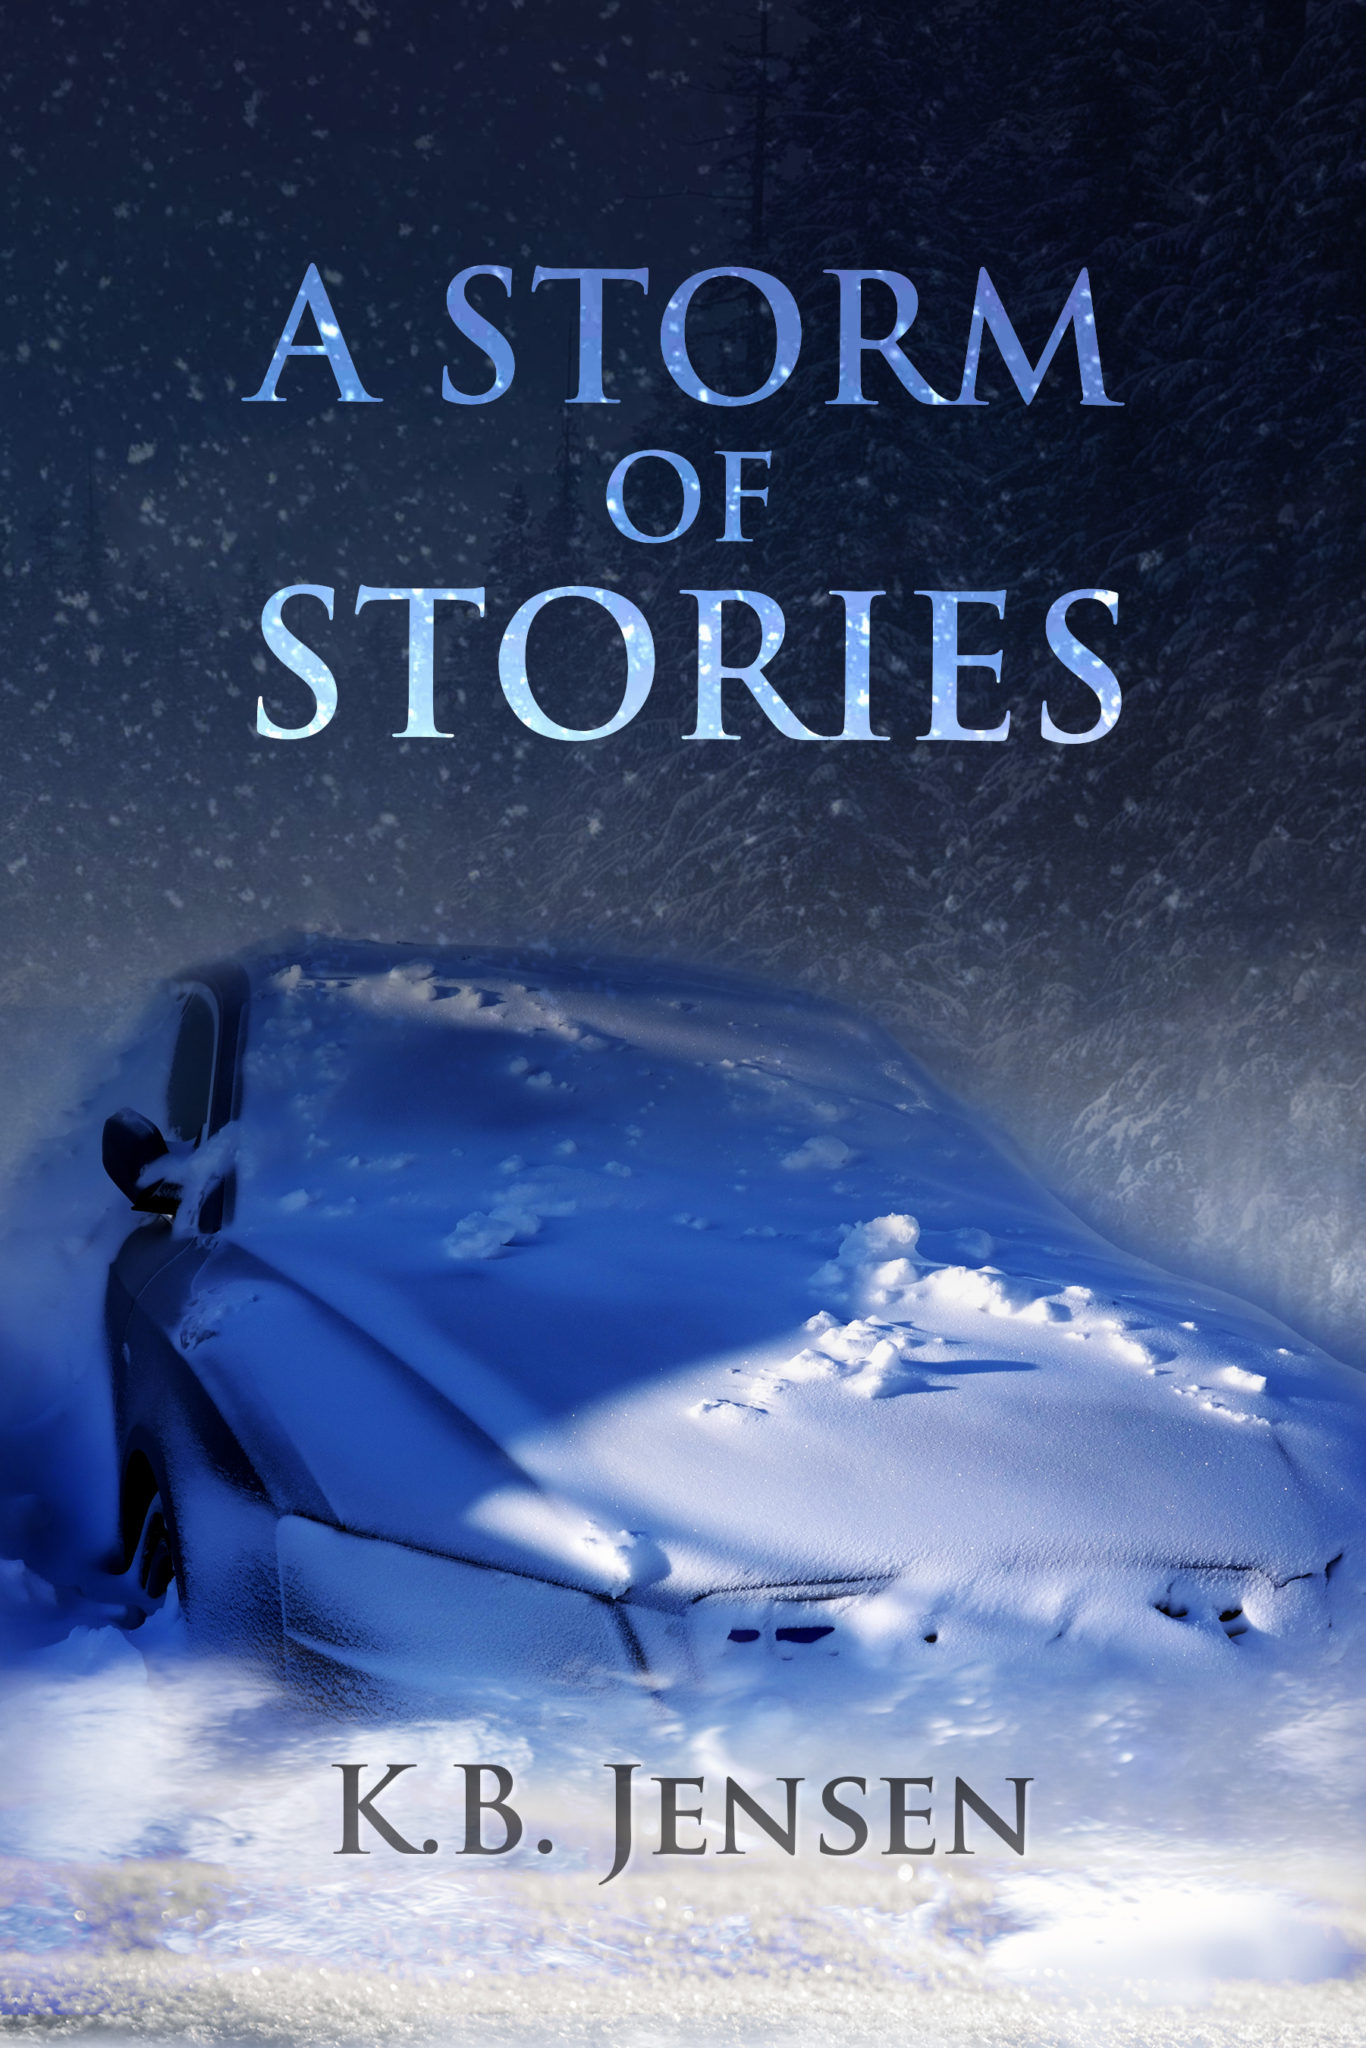 FREE: A Storm of Stories by K.B. Jensen